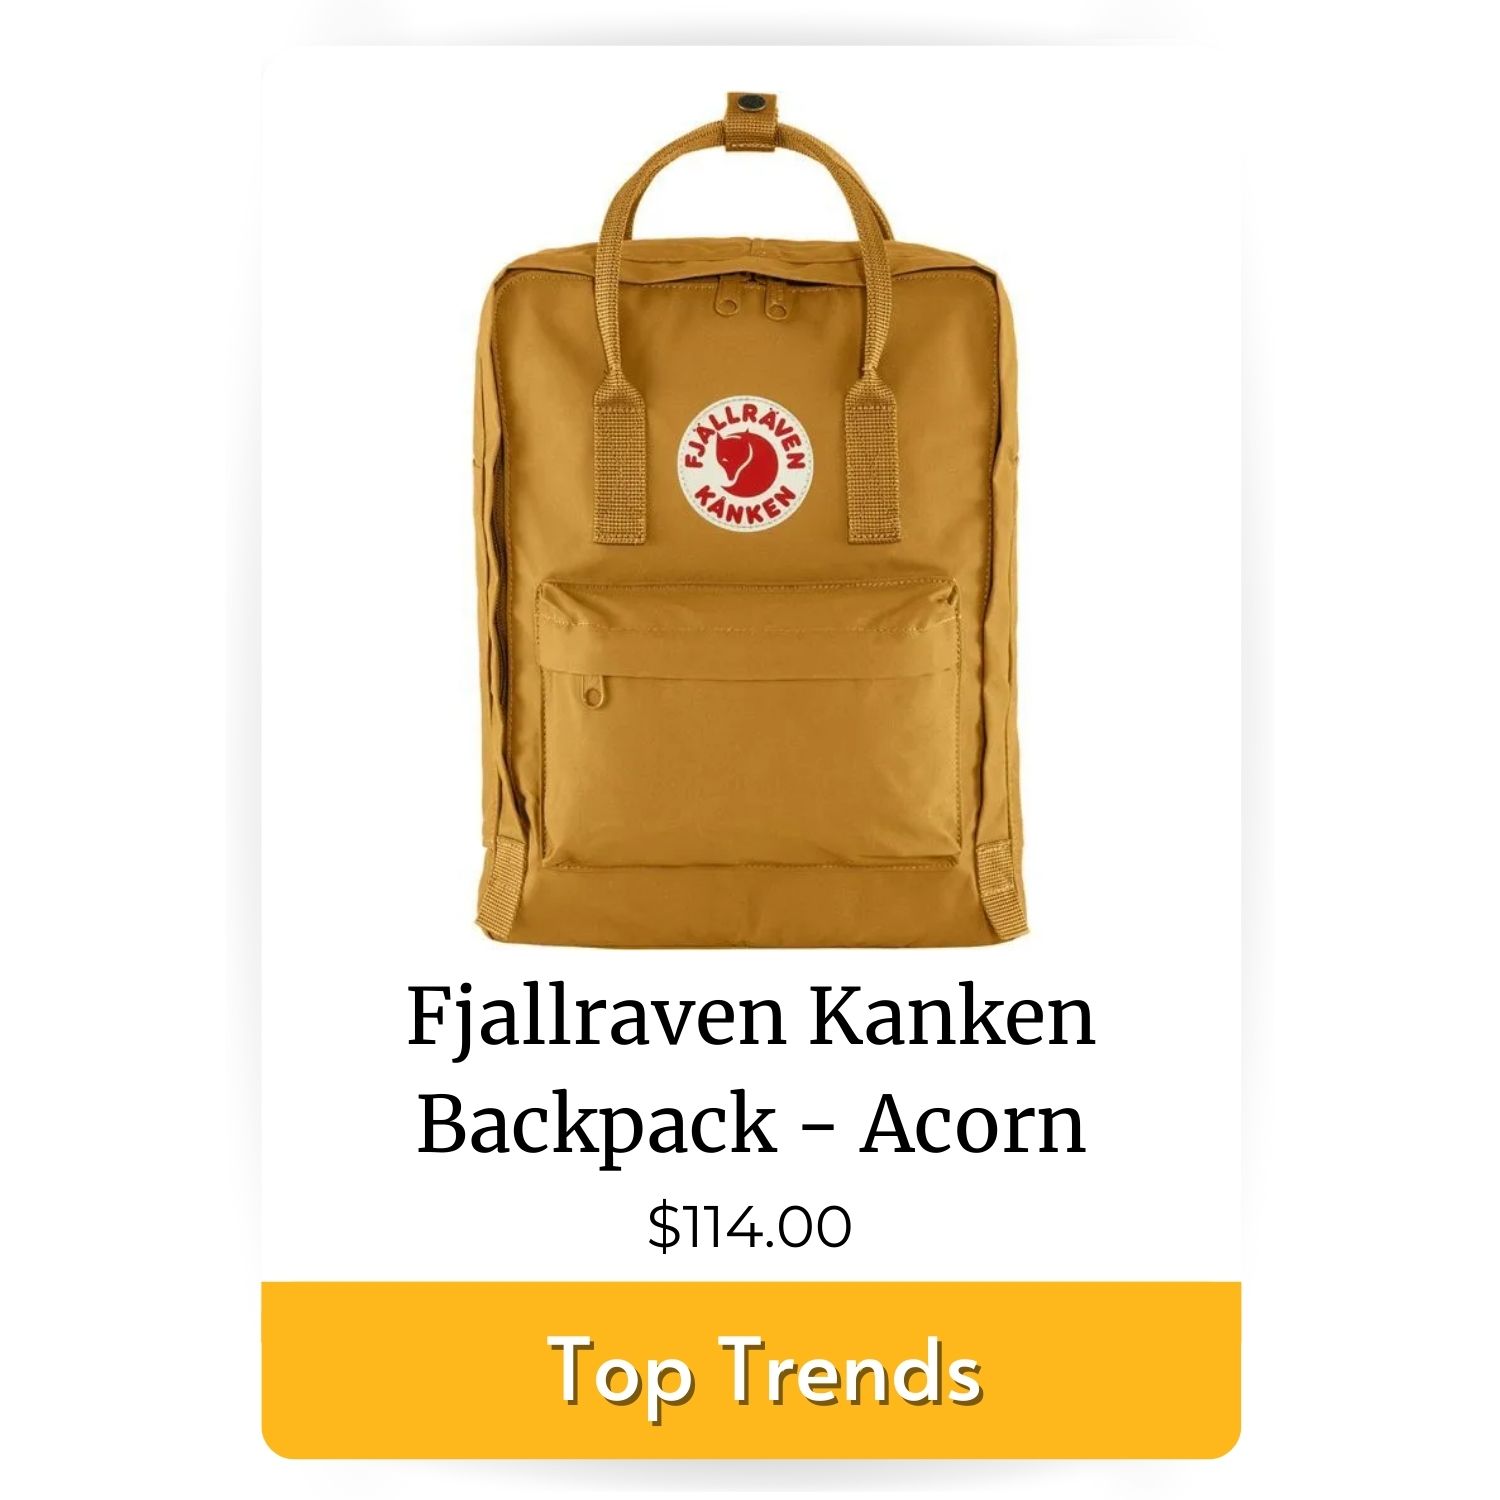 tech trends featured product fjallraven kaken backpack acorn 114 dollars